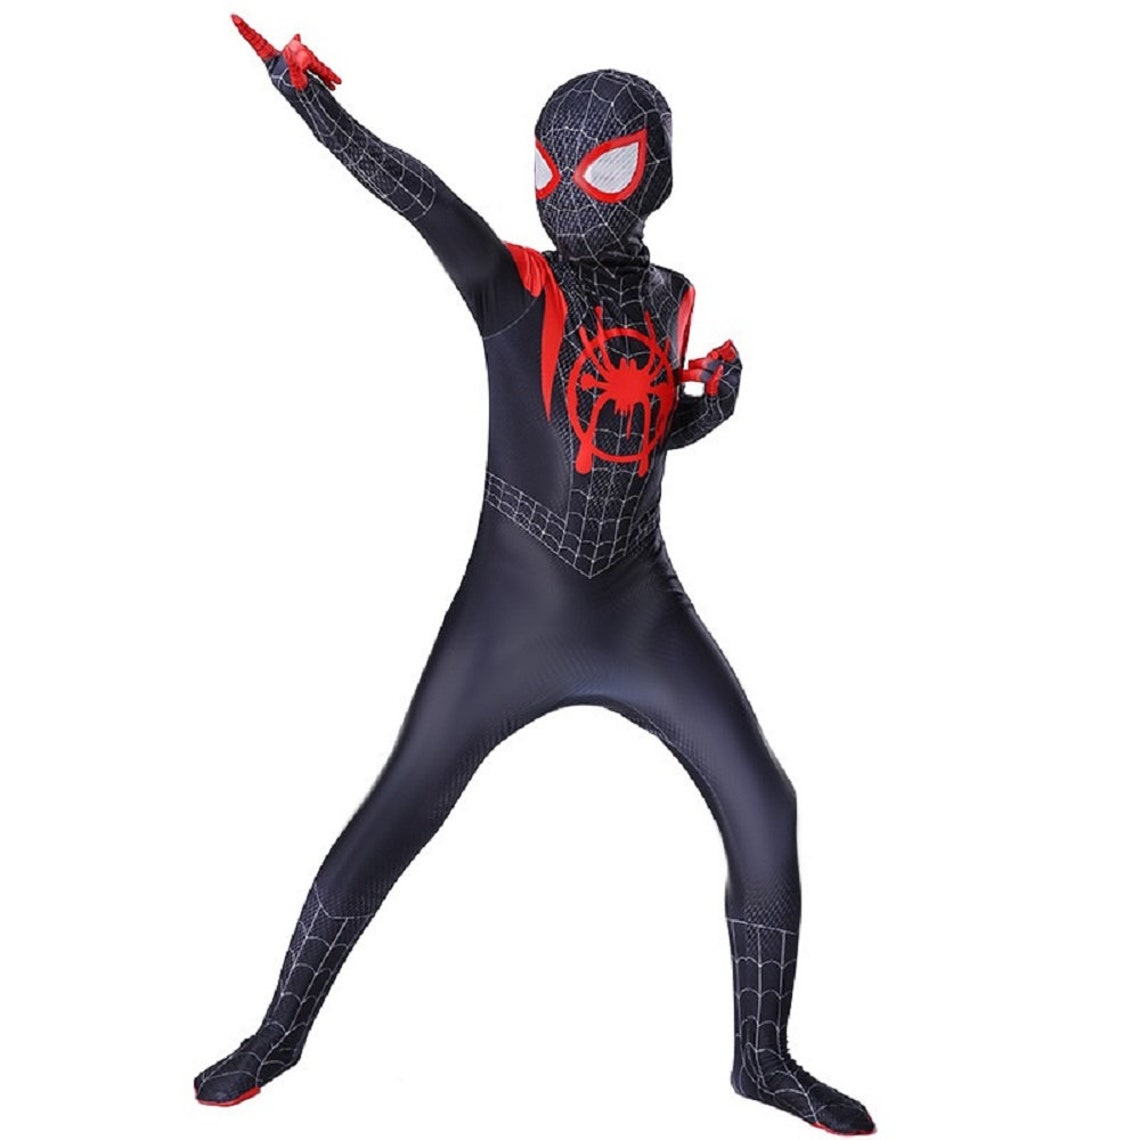 Black spider man costume Bimbo Spiderman 8 10 years Old | Etsy